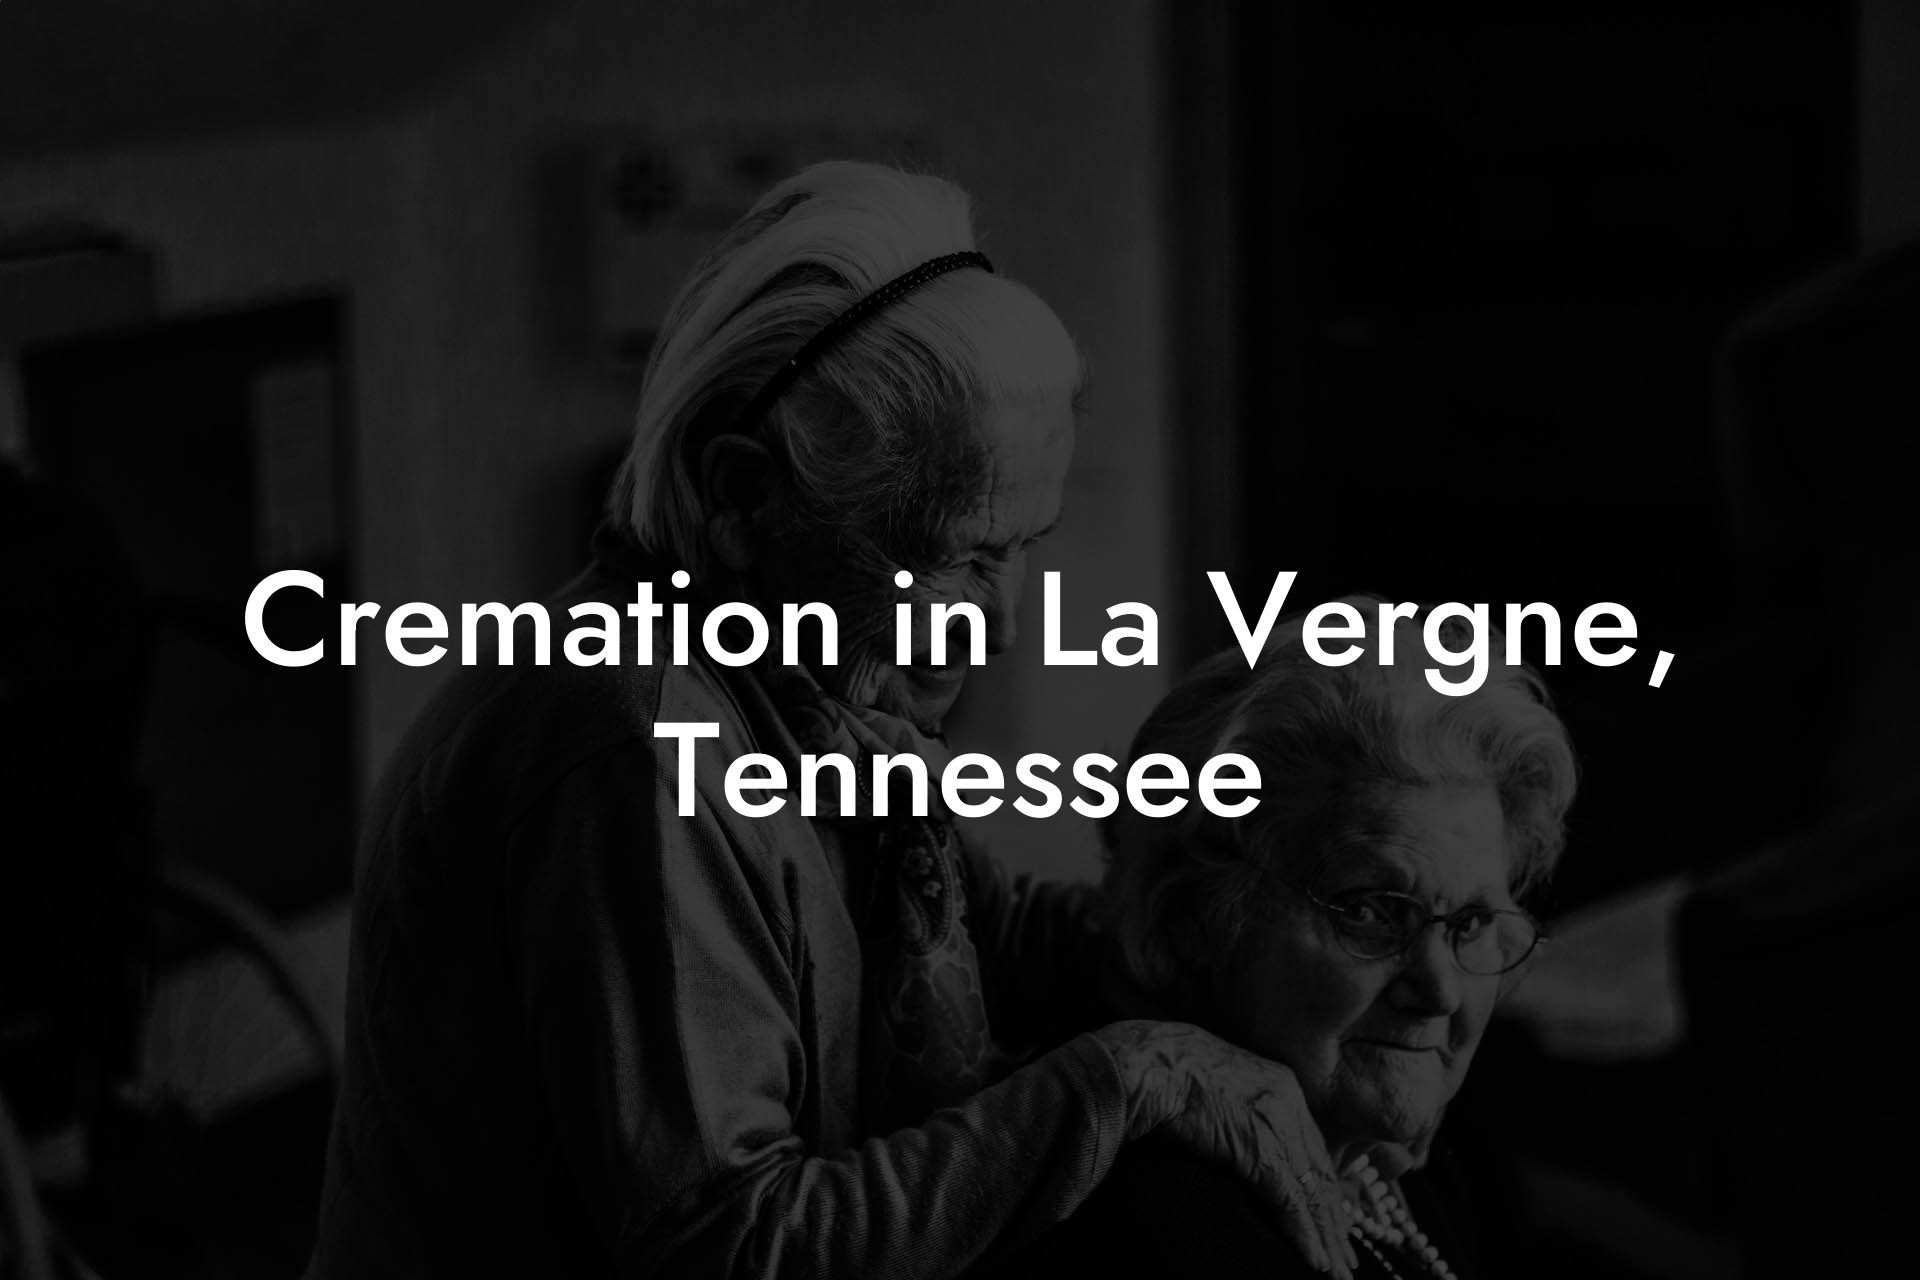 Cremation in La Vergne, Tennessee